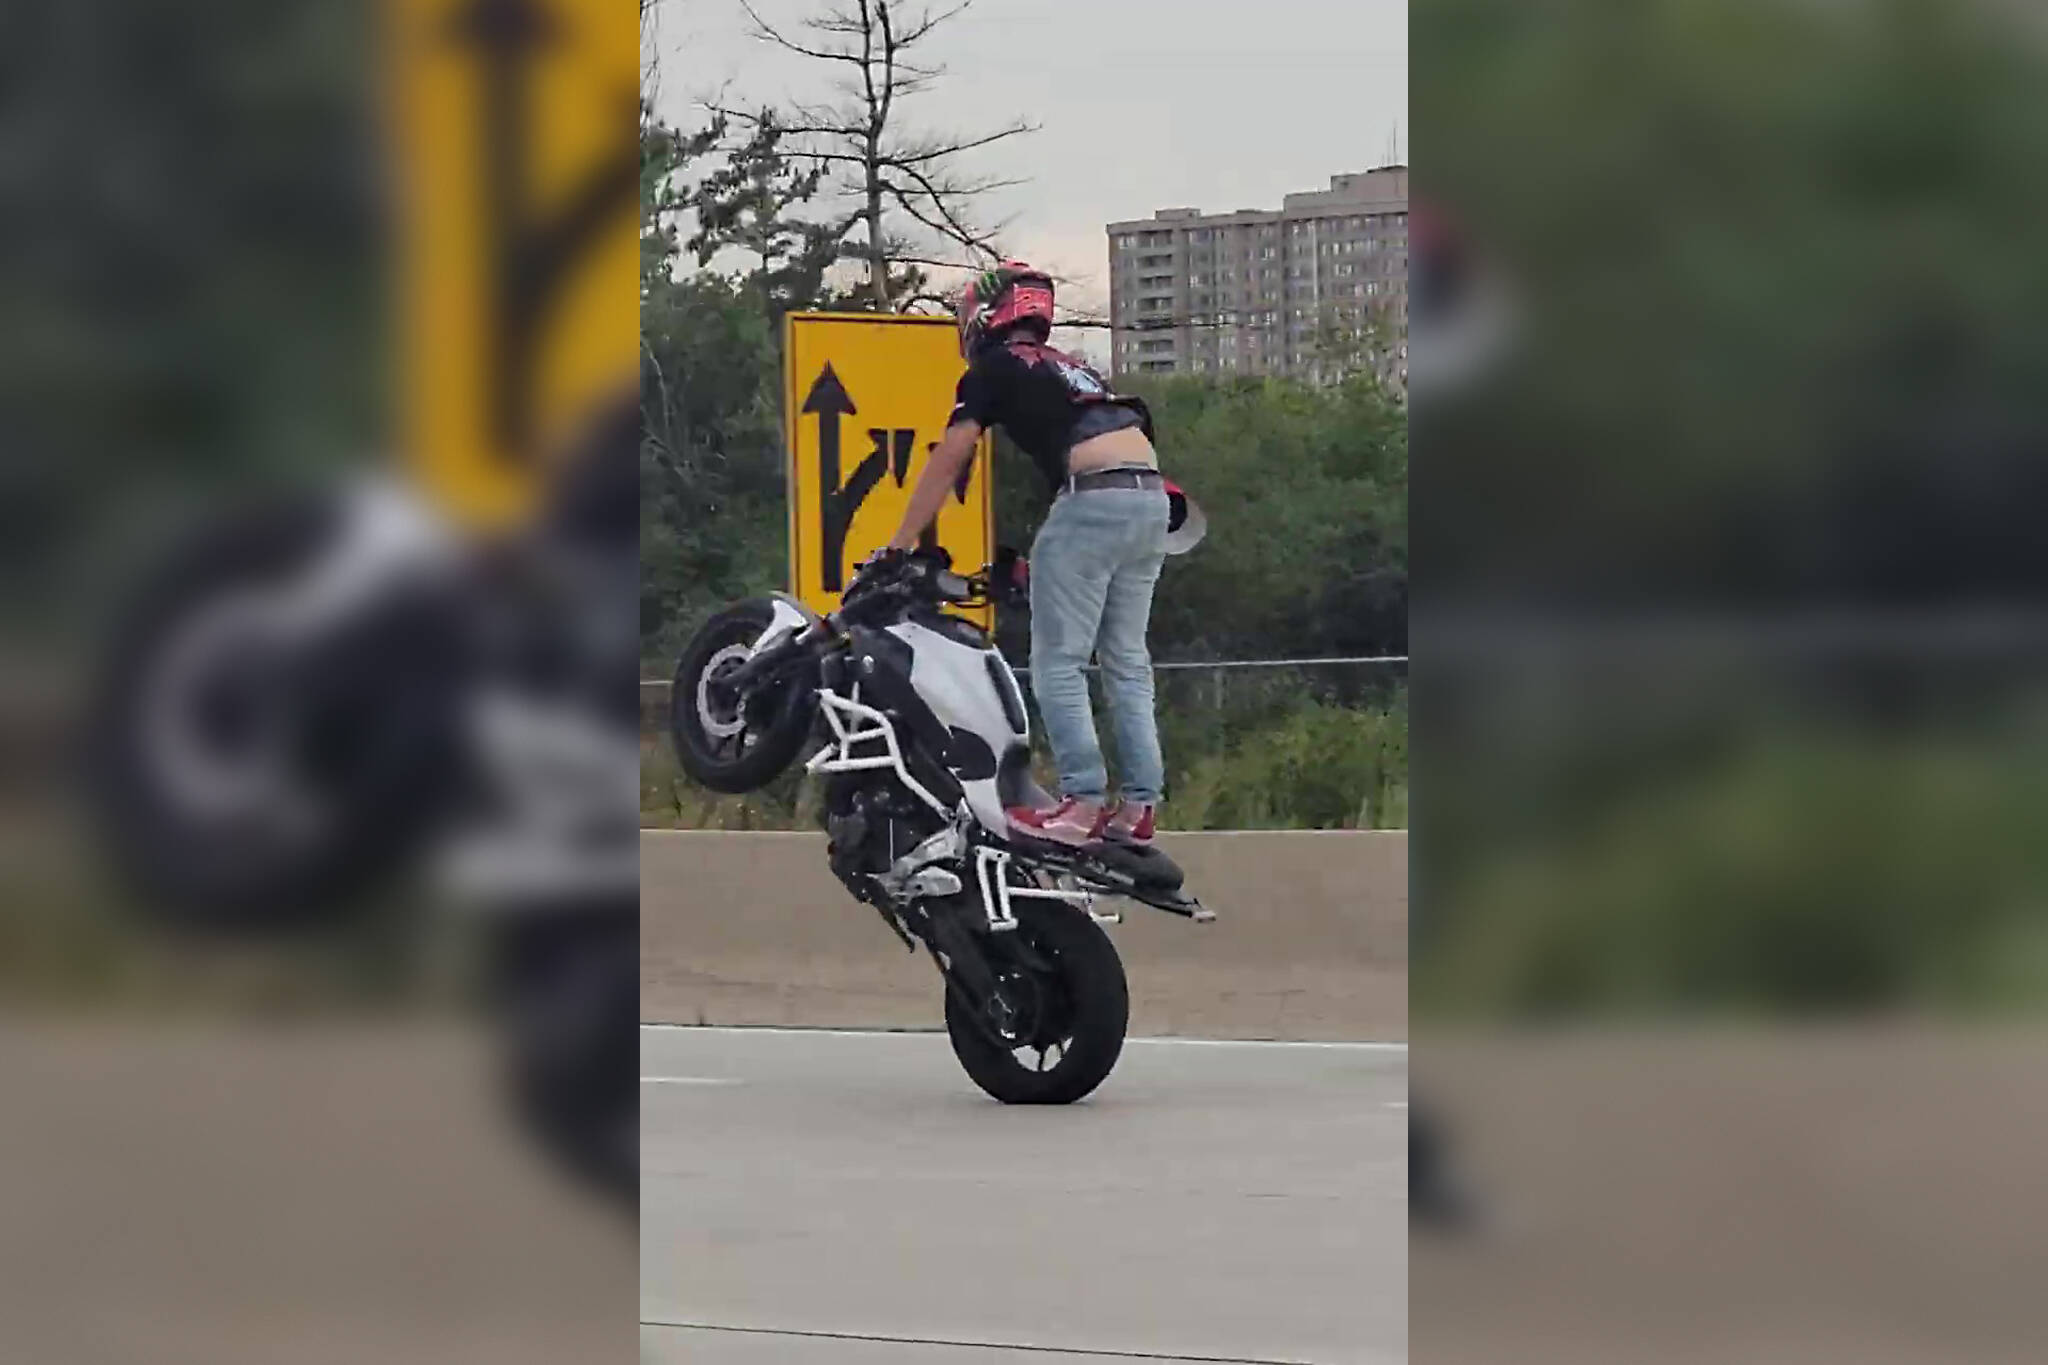 407 motorcycle stunt